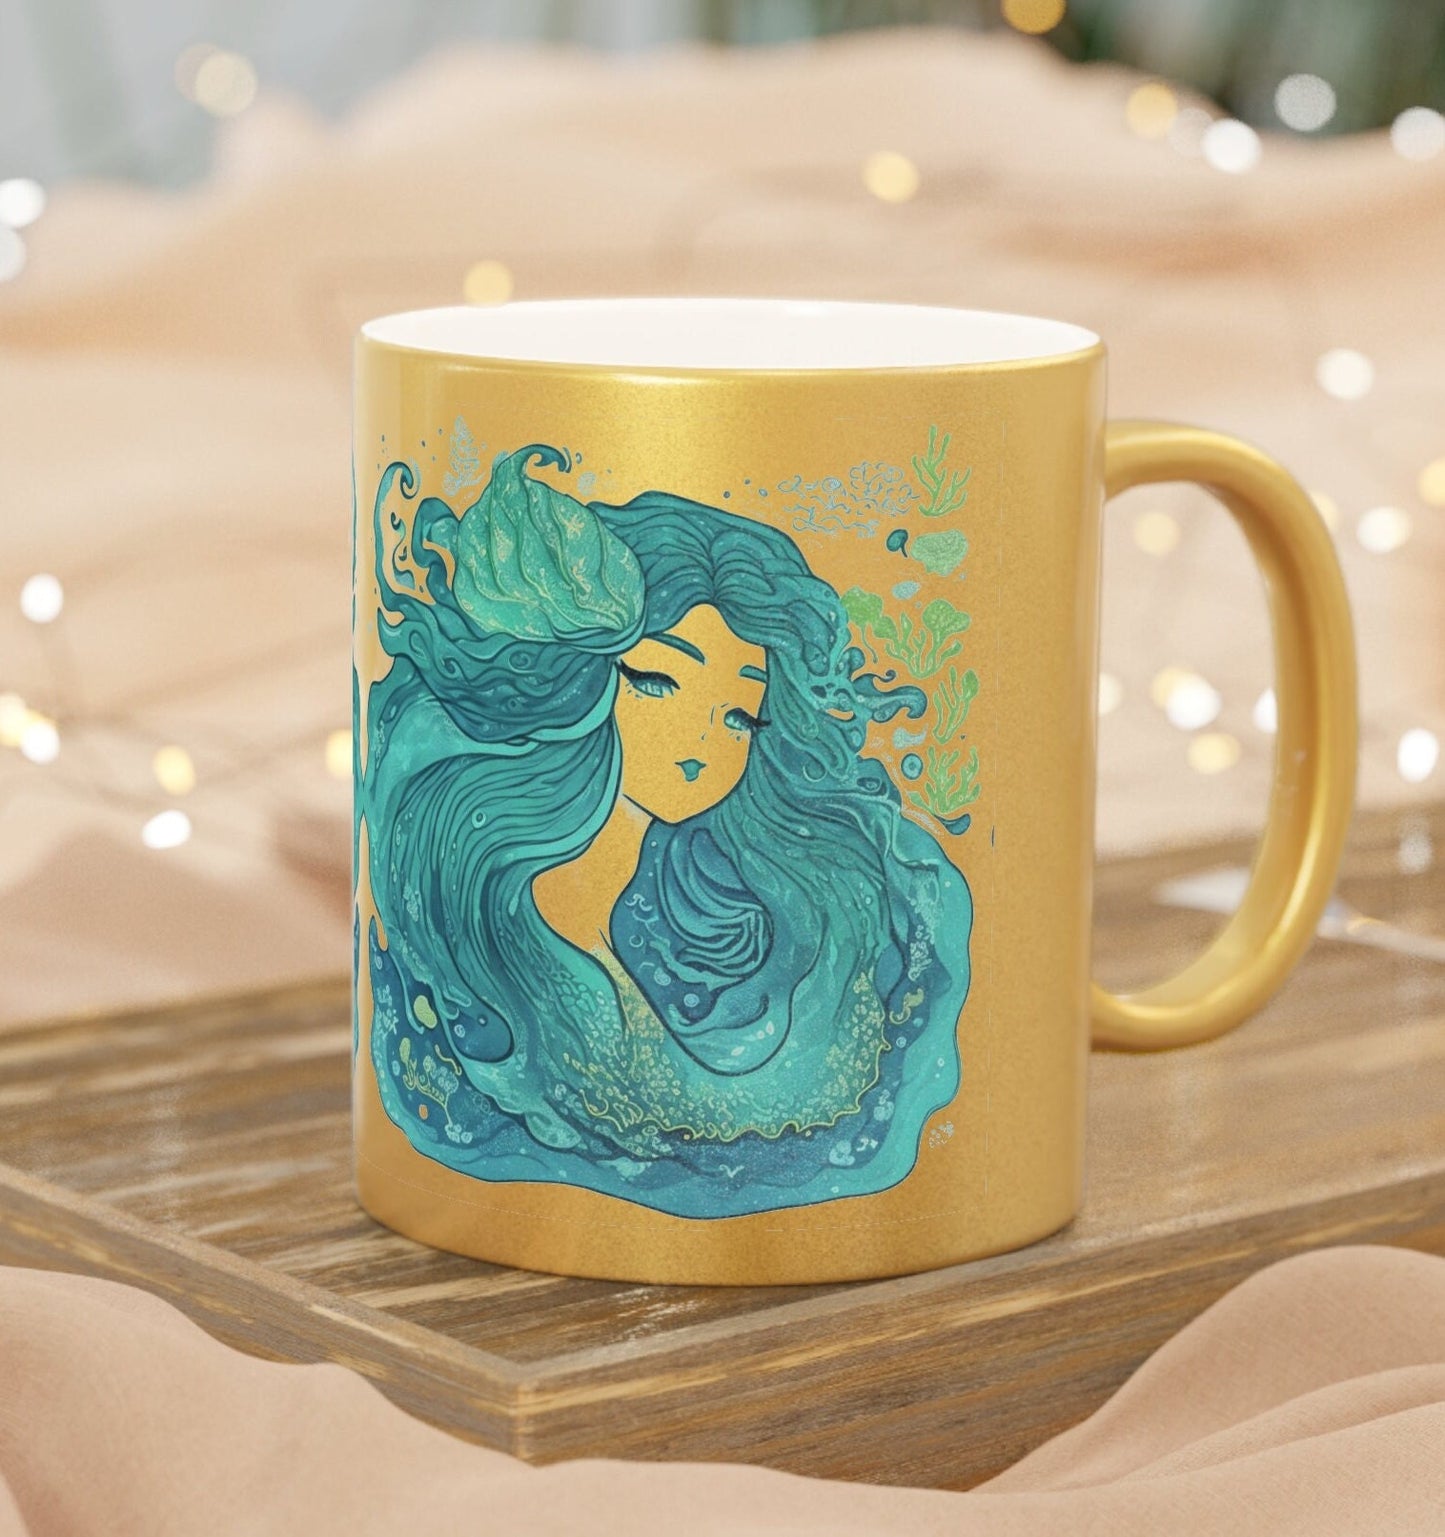 Metallic Mermaid Mug Gift Gold Mermaid Silver Mug Blue Mermaid Background Mug Sirens Mermaids Gift Art Nouveau Mermaid Aesthetic Gift Mug #3